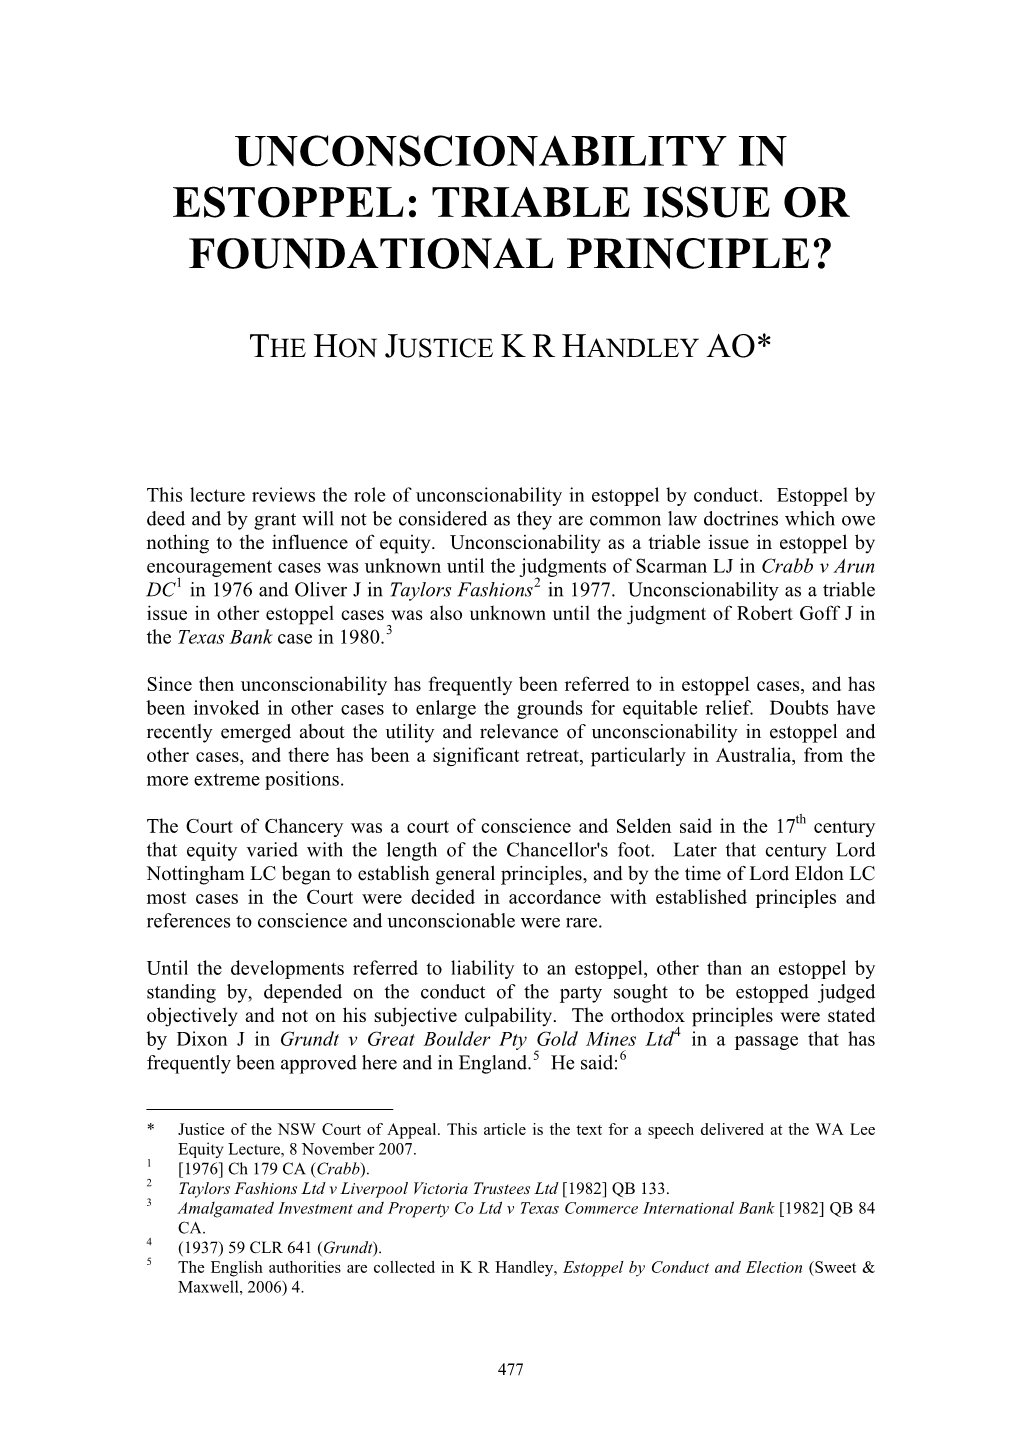 Unconscionability in Estoppel: Triable Issue Or Foundational Principle?